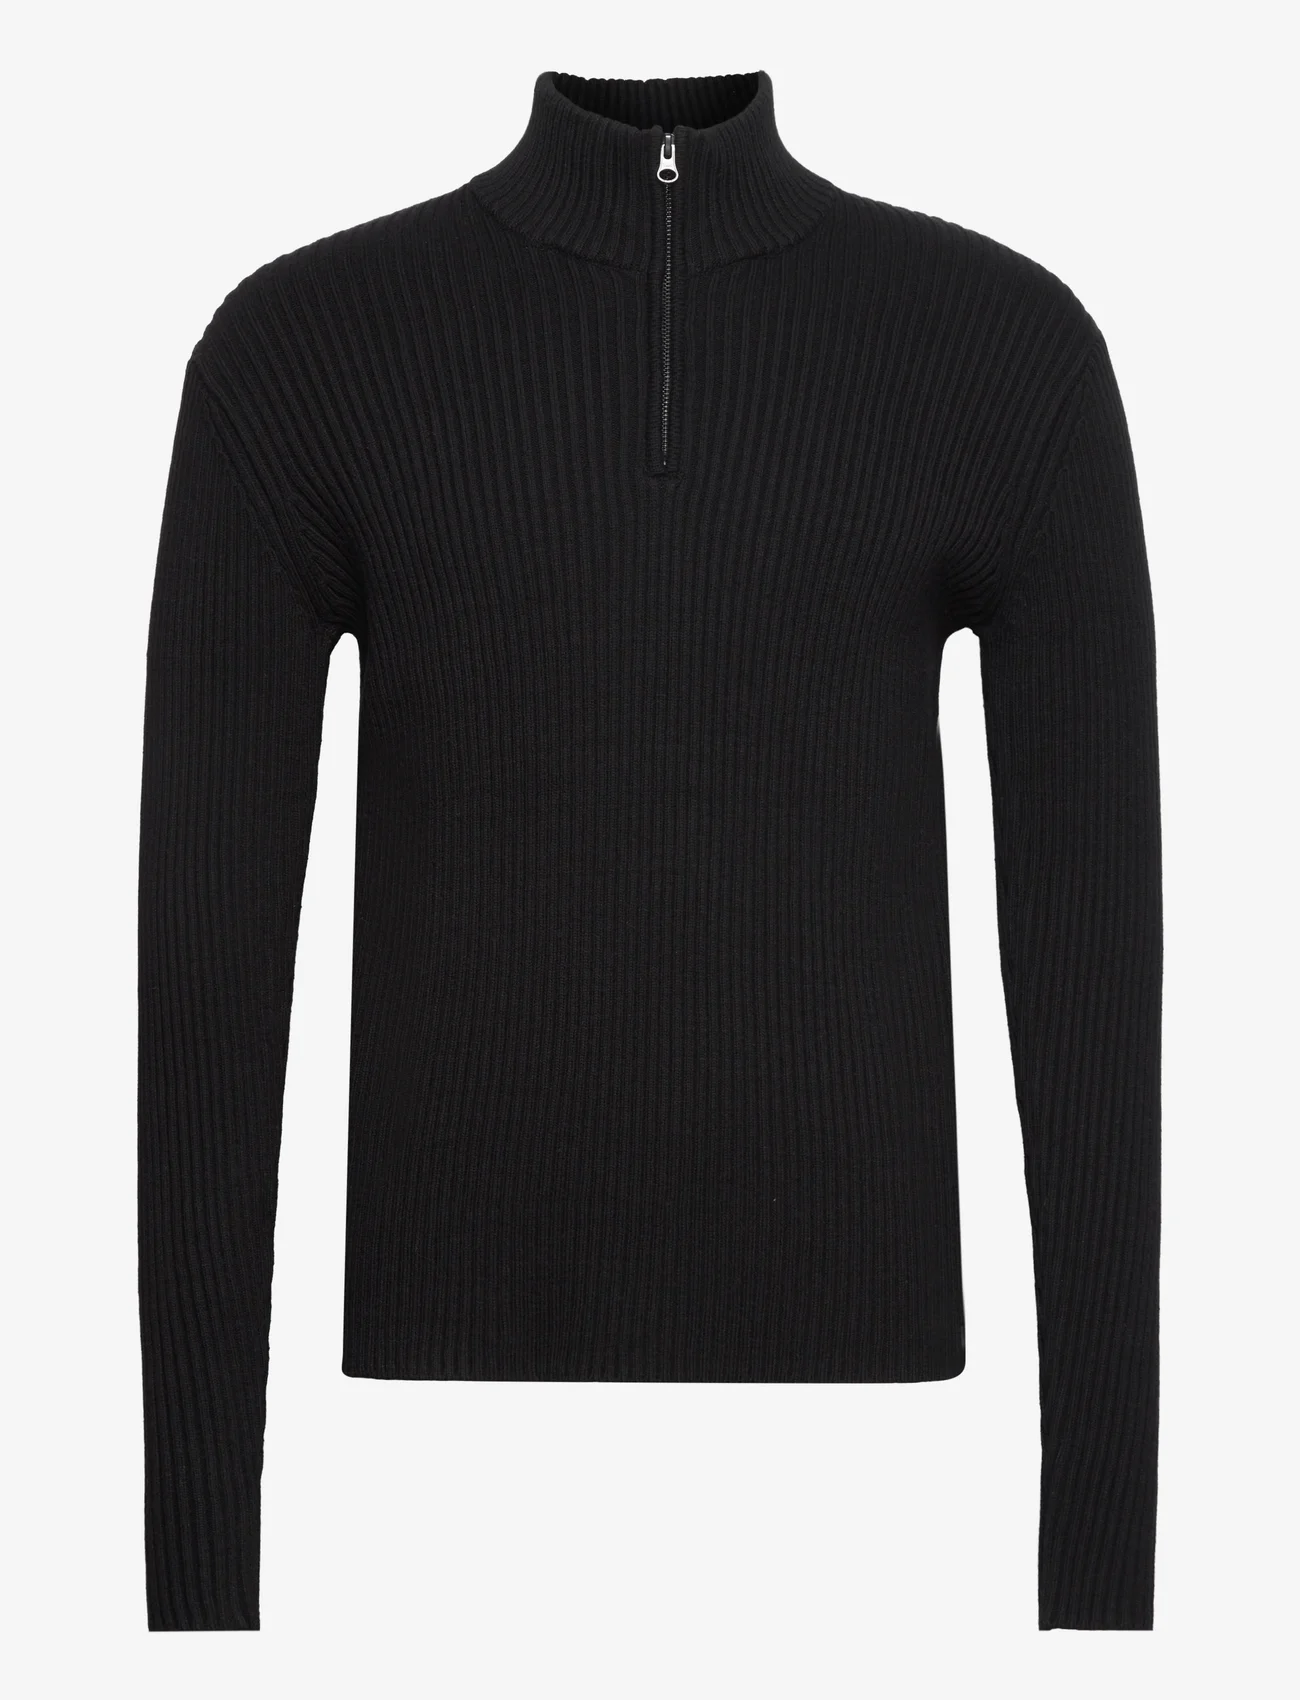 Bruuns Bazaar - SimBBBilly zip knit - mænd - black - 0